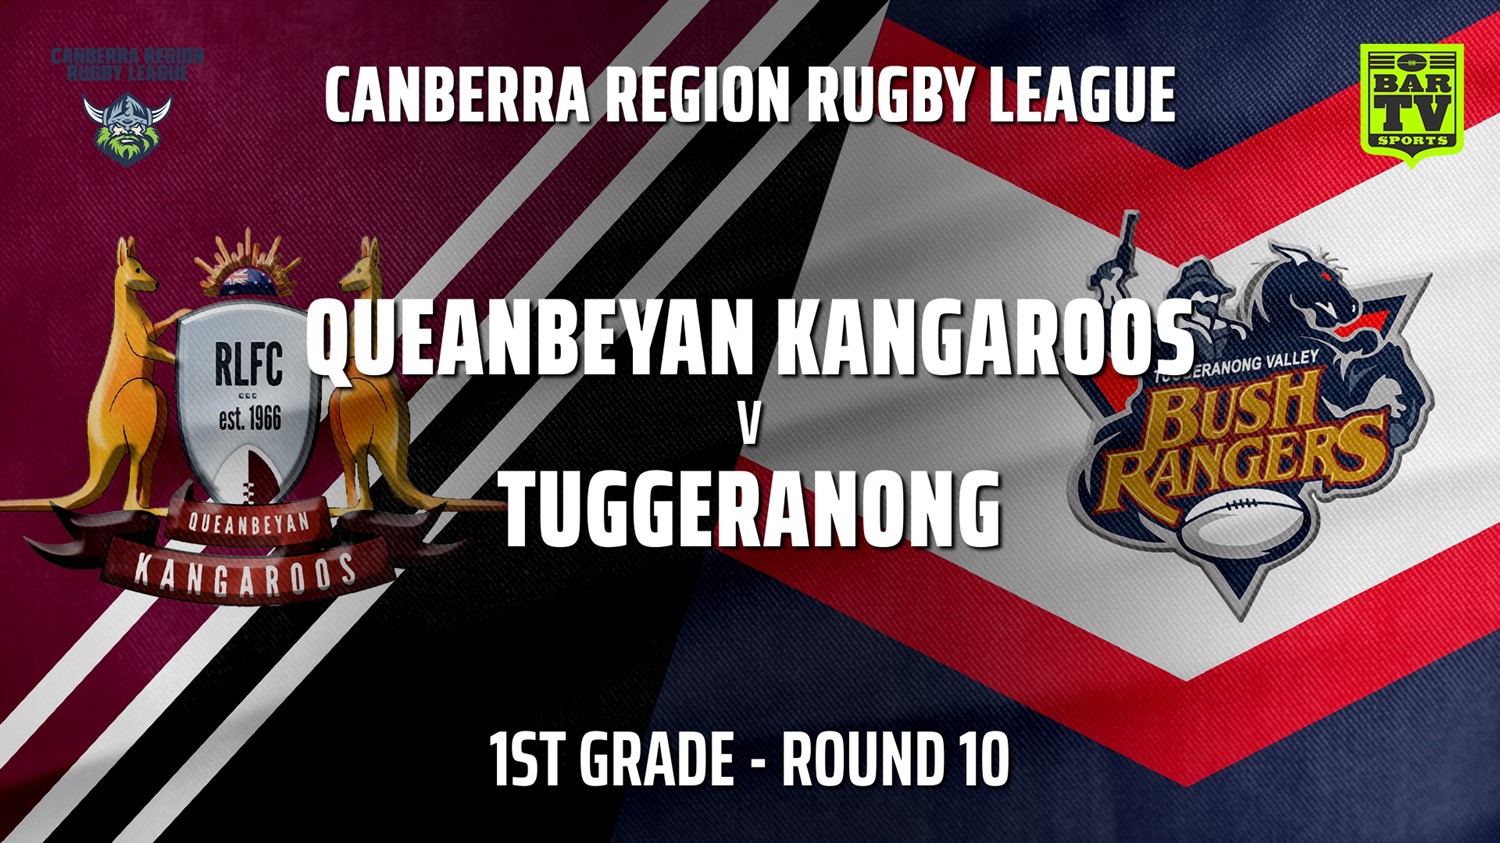 210703-Canberra Round 10 - 1st Grade - Queanbeyan Kangaroos v Tuggeranong Bushrangers Minigame Slate Image